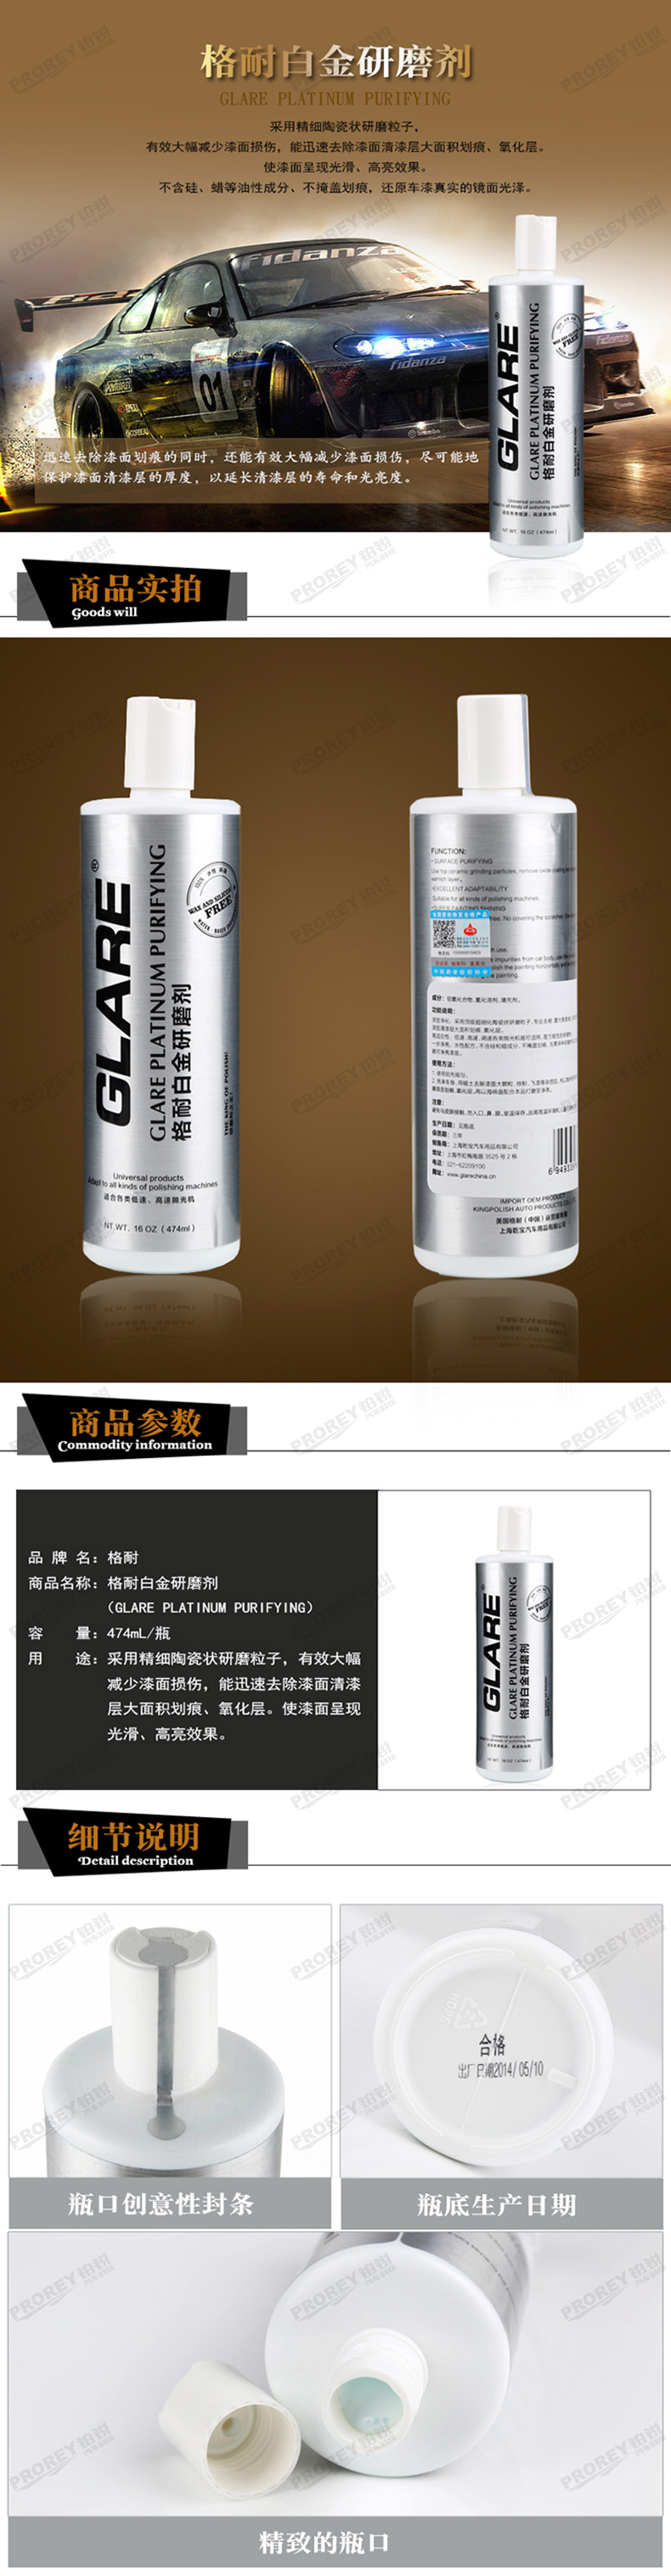 GW-180080578-GLARE格耐 GL-022(474毫升瓶) 白金研磨剂-1